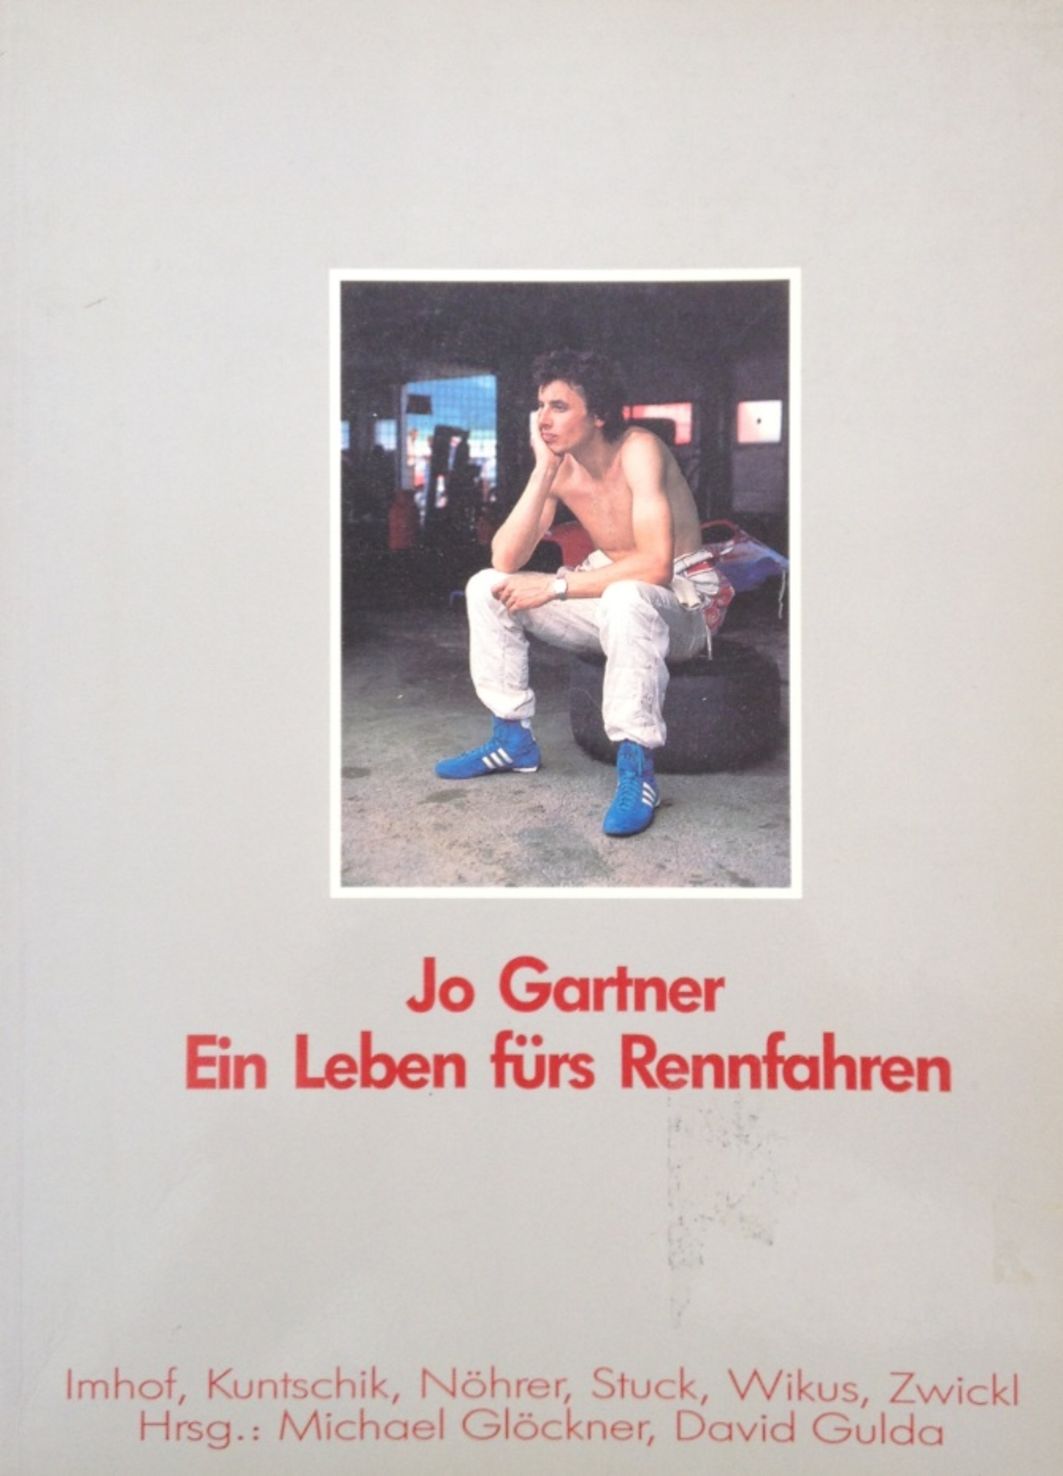 JO GARTNER WÄRE 69 Jo Gartner – Erinnerung an eine Renn-Legende